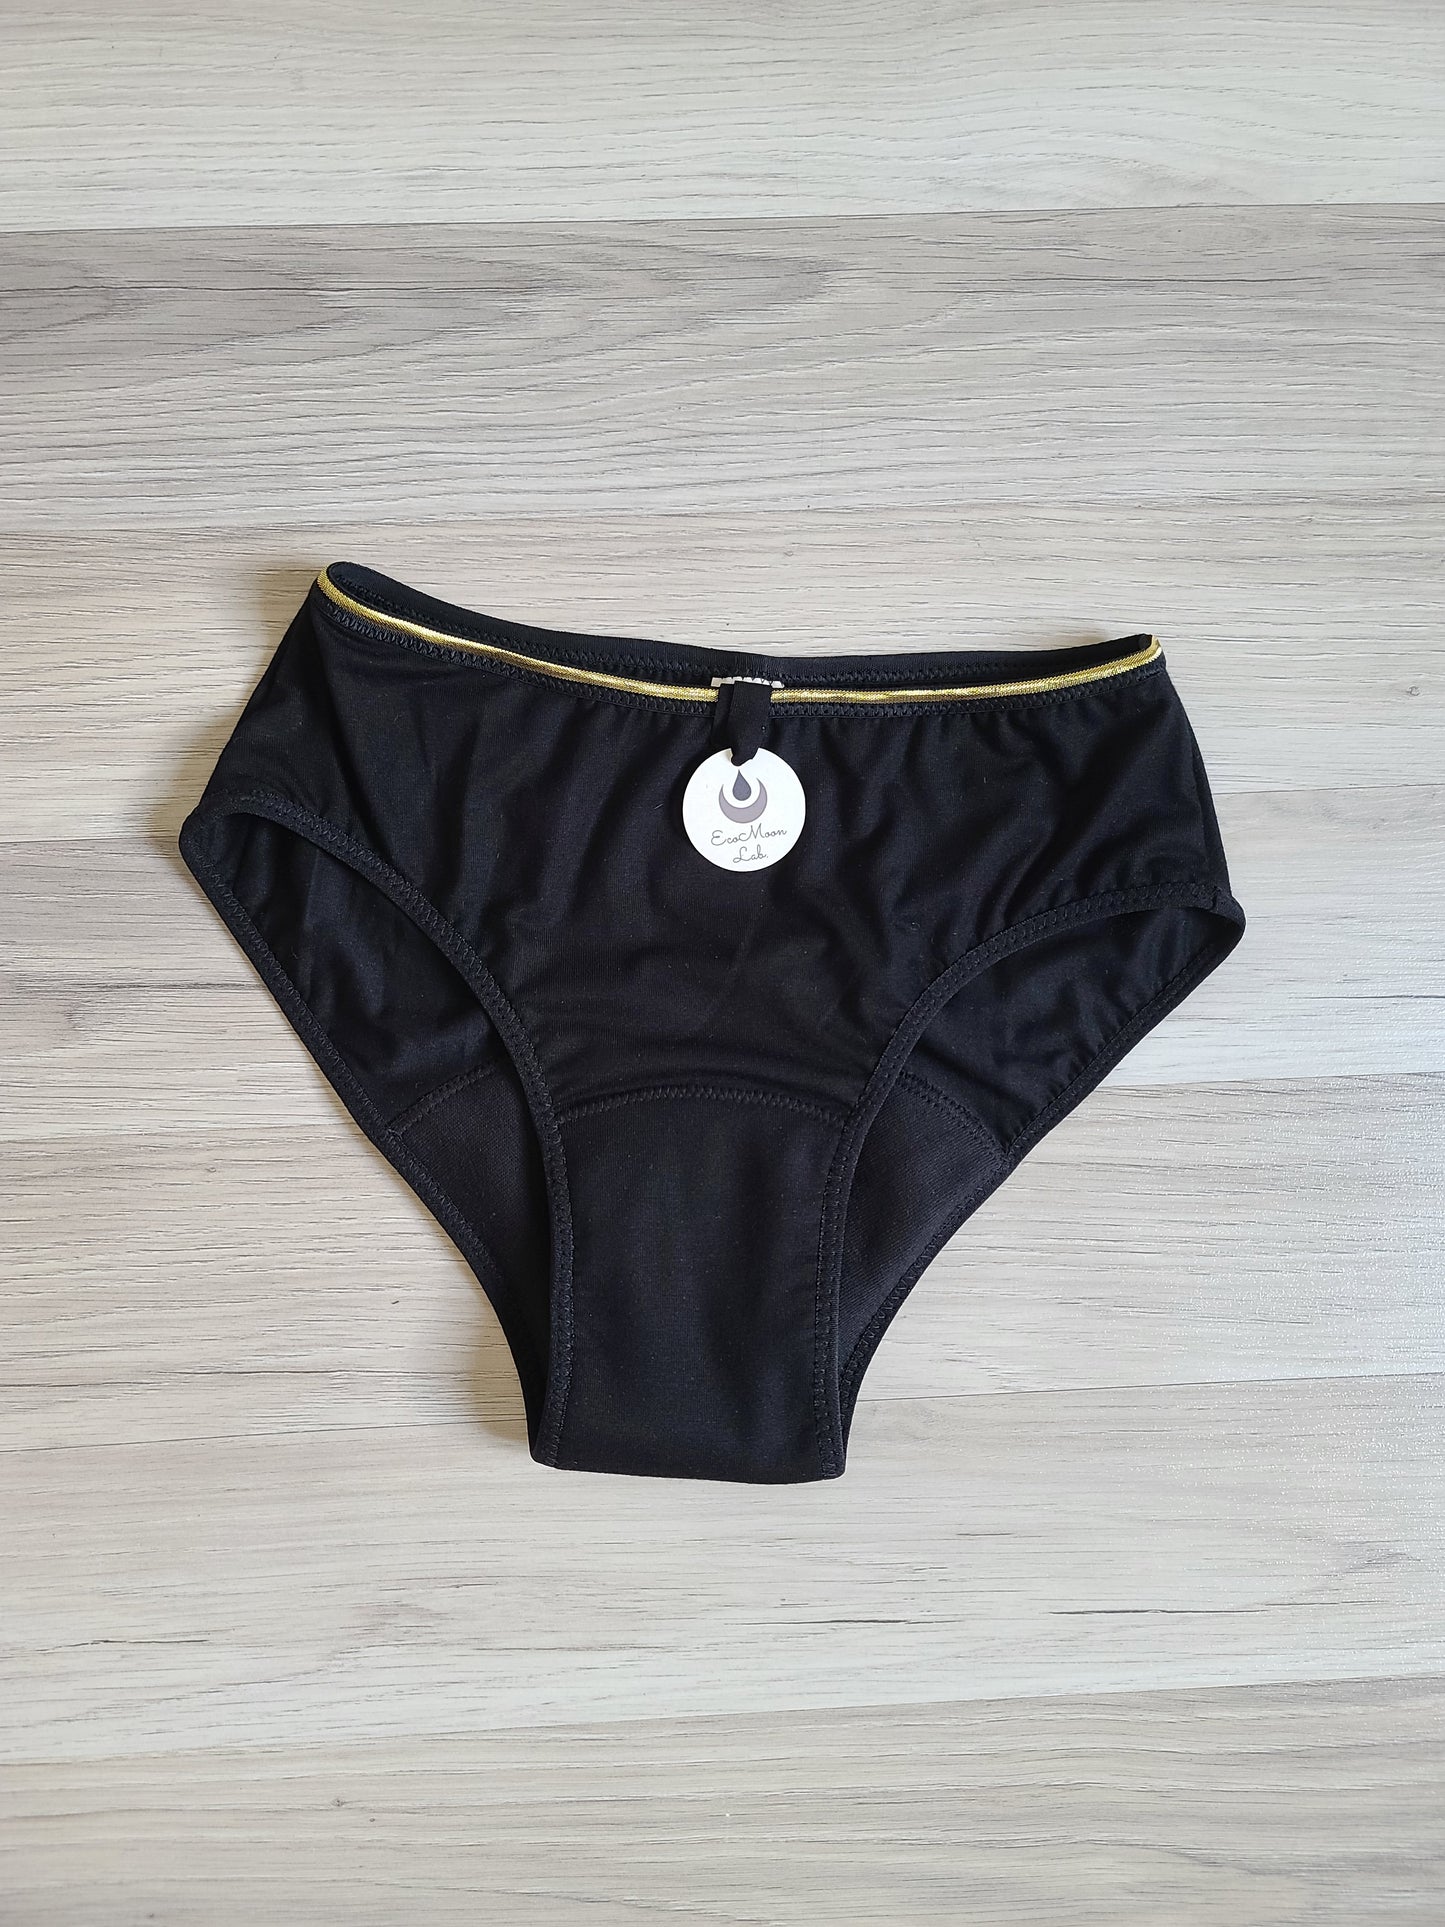 MoonDay Period underwear